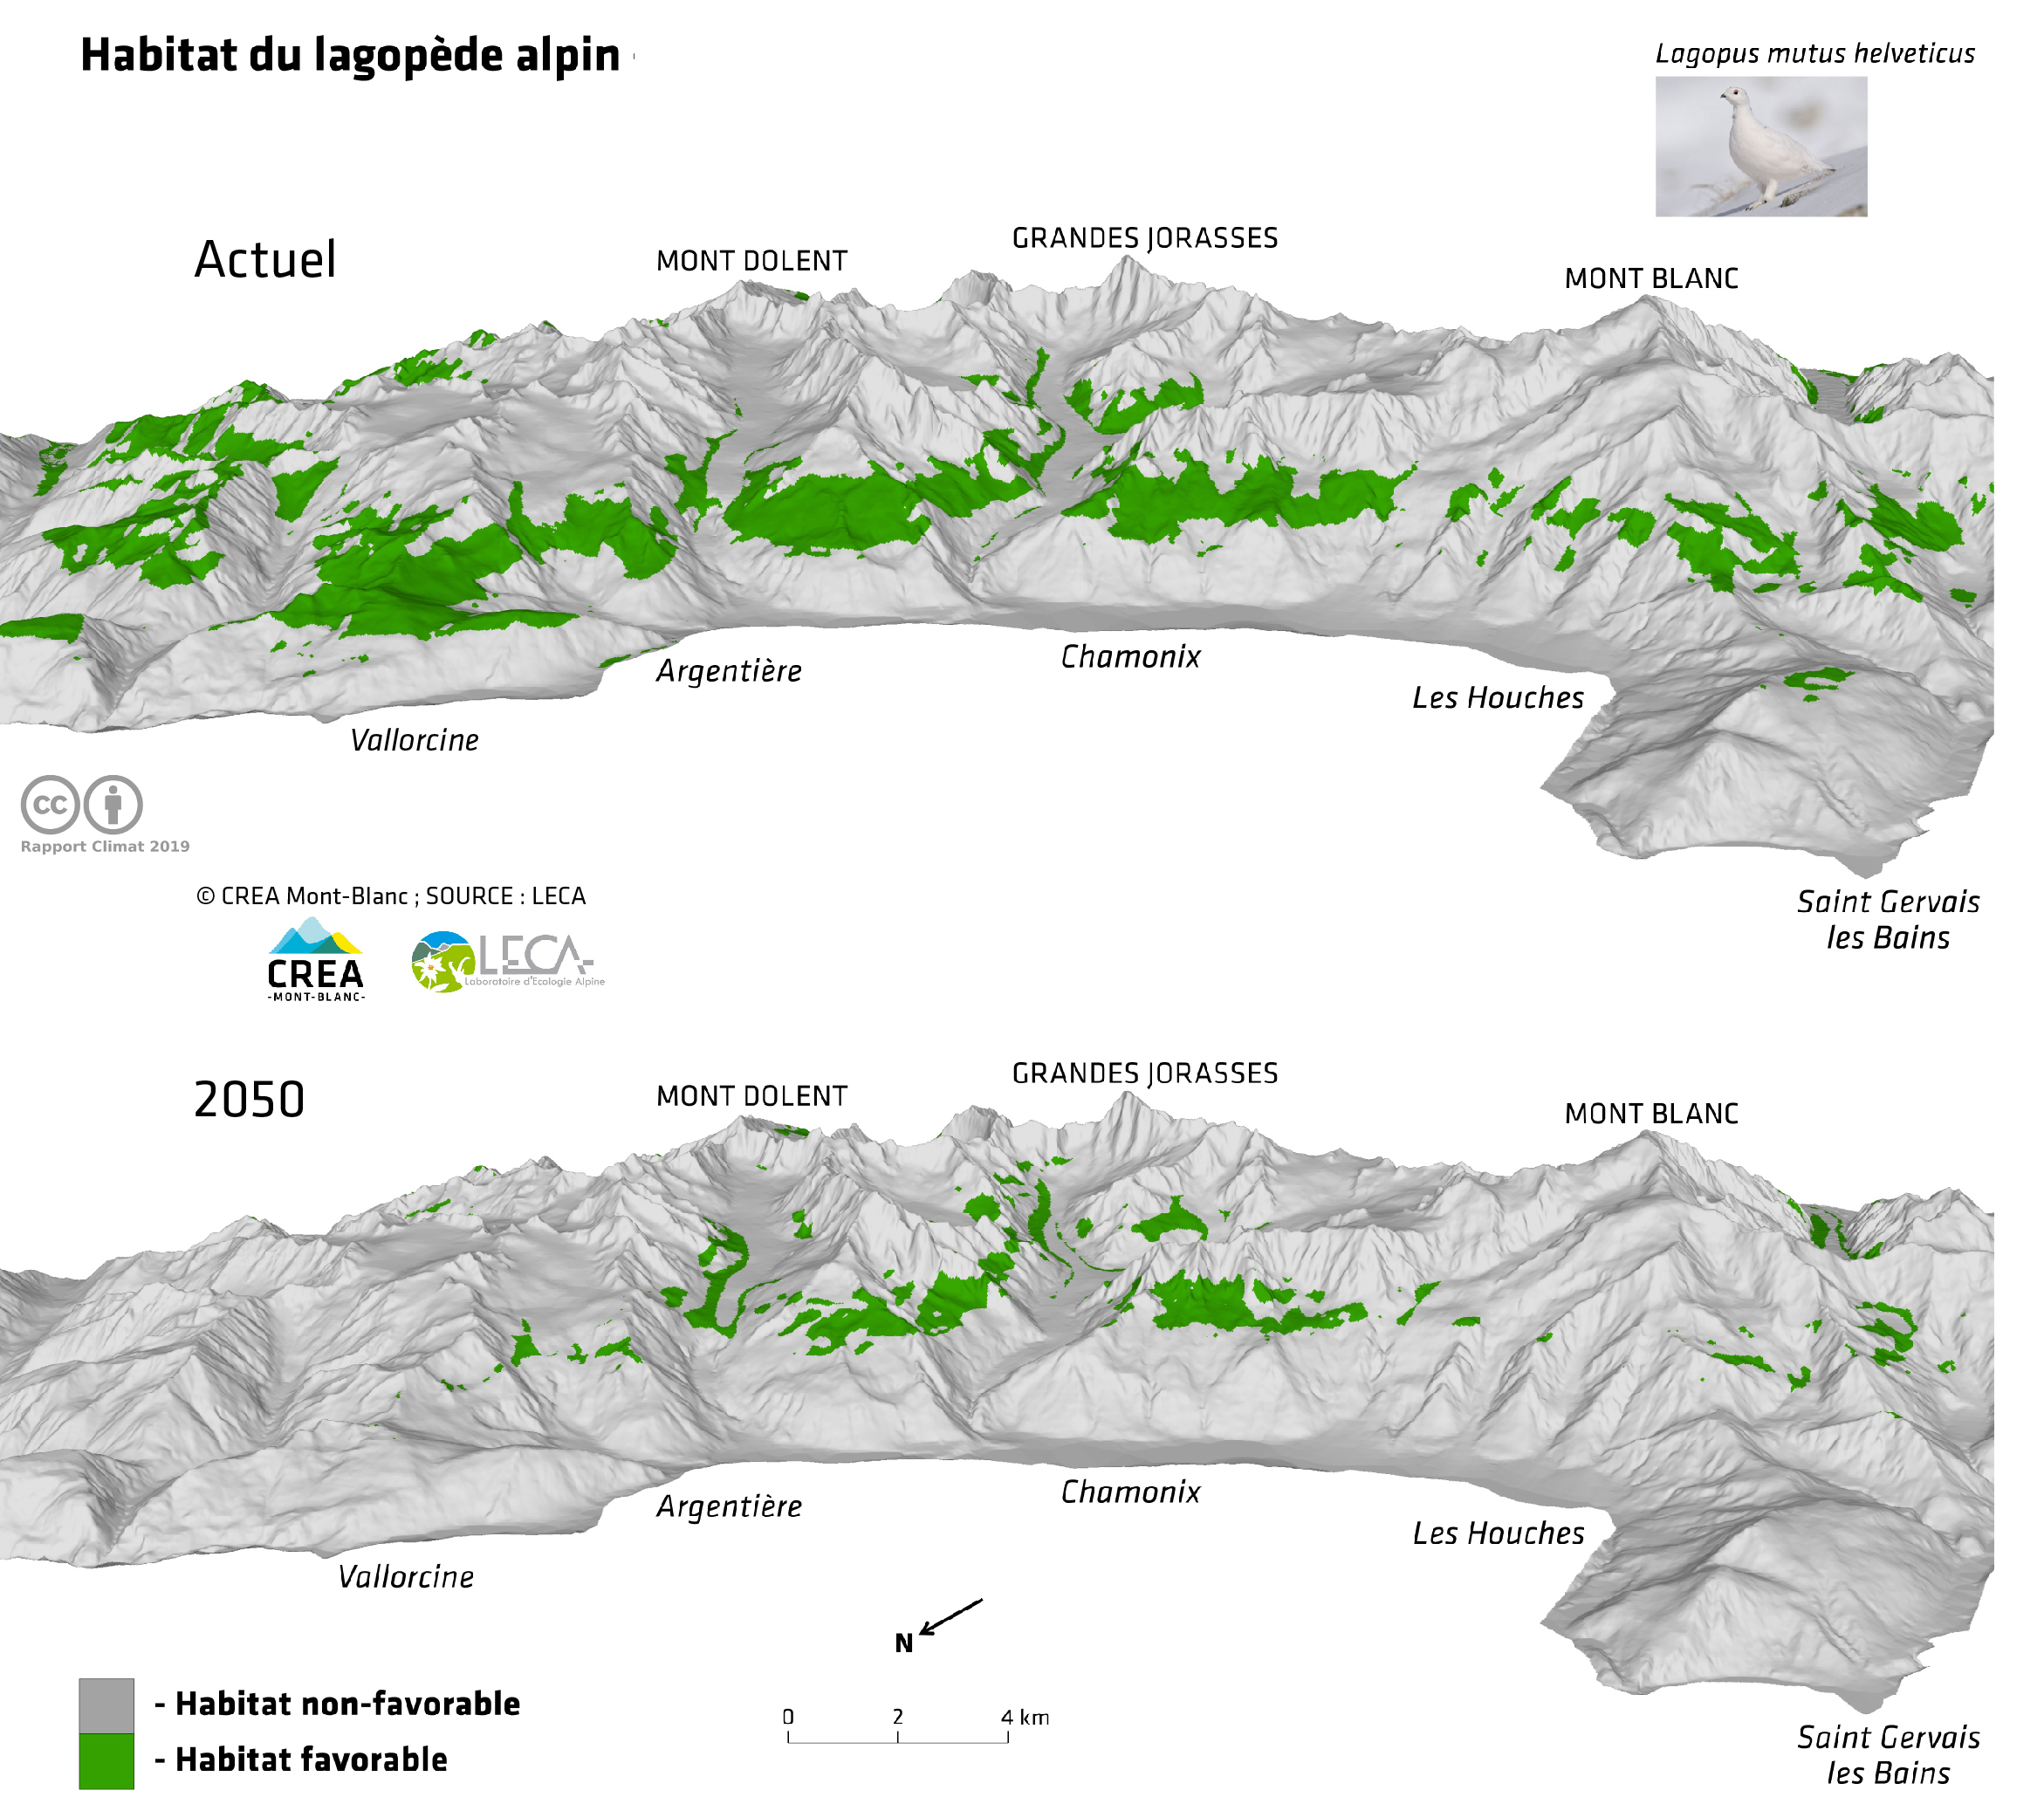 Habitat du lagopède alpin